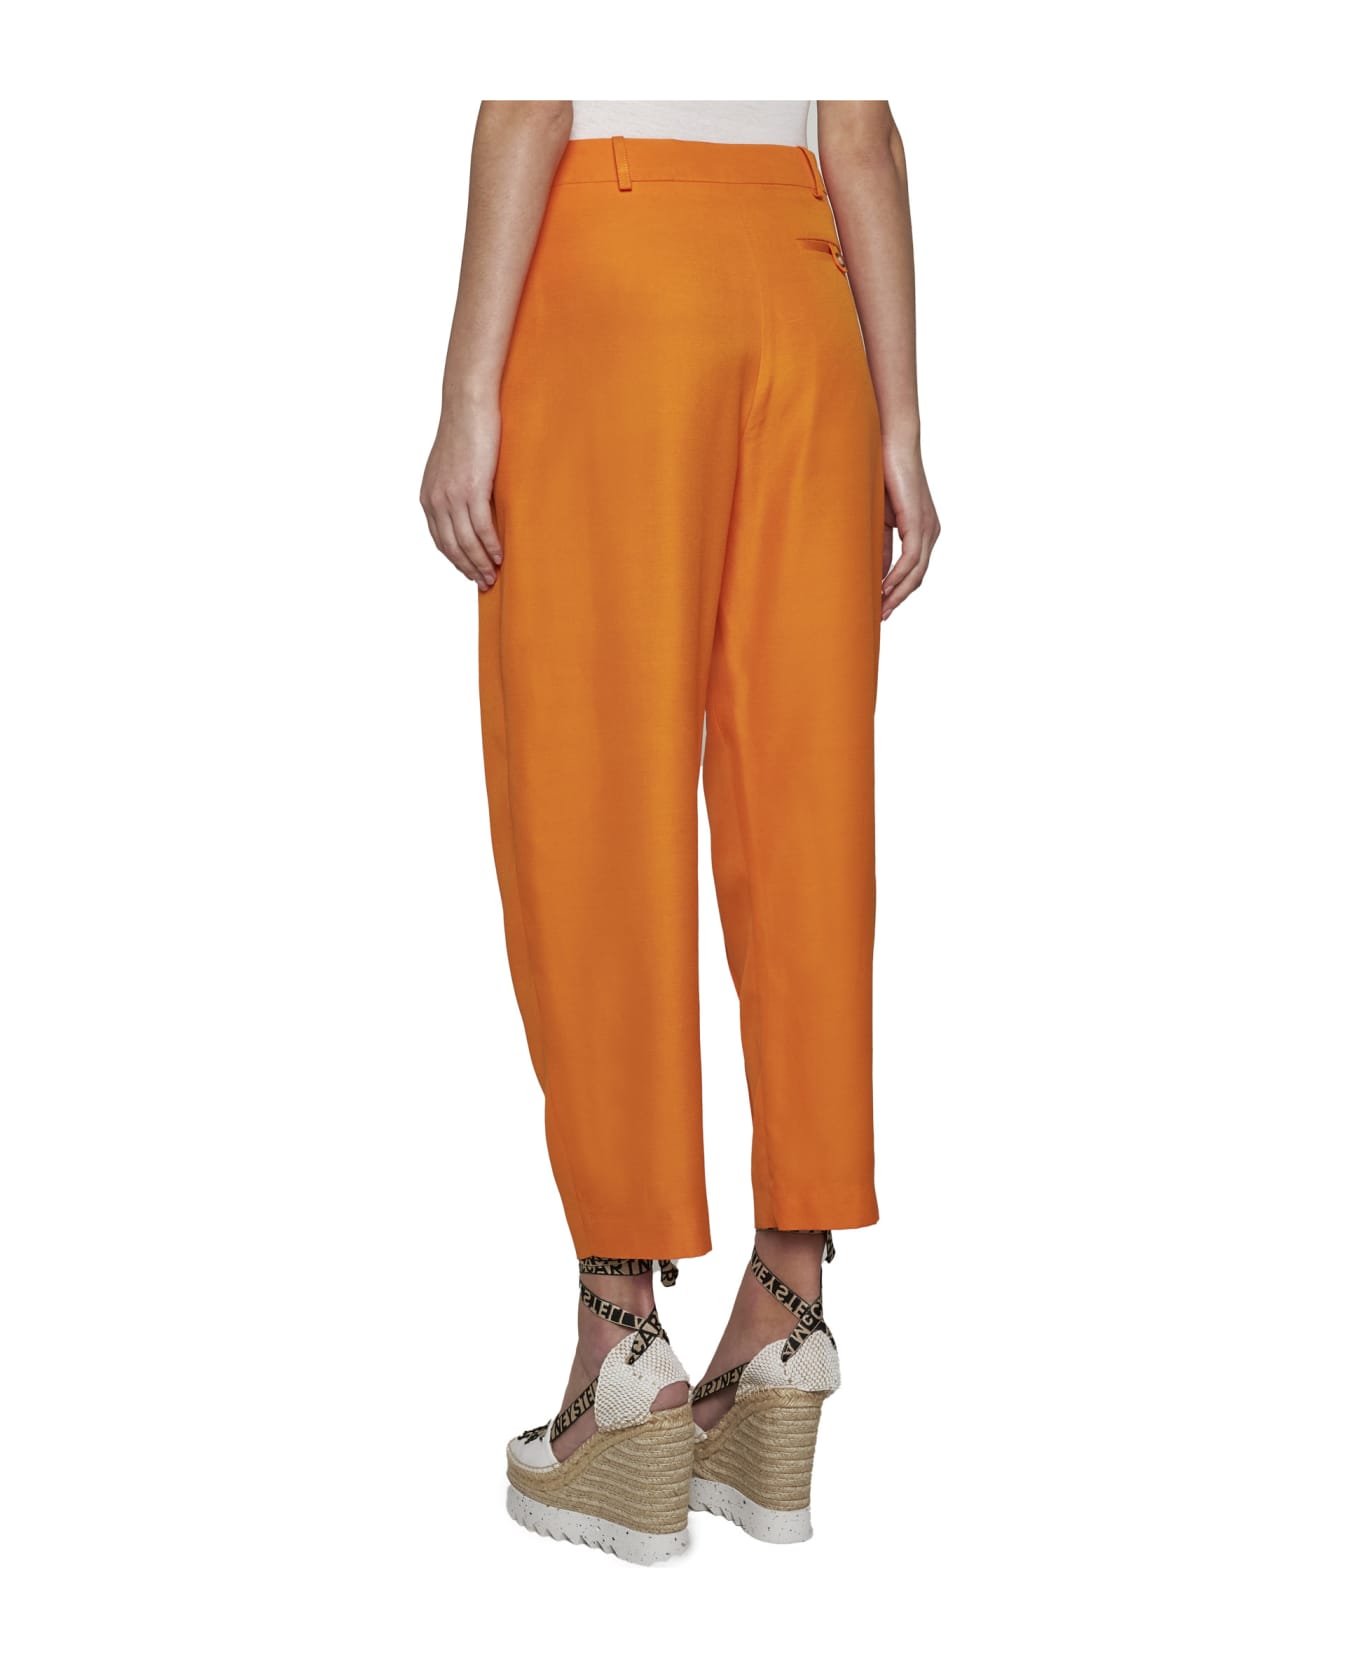 Stella McCartney Pants - Bright orange